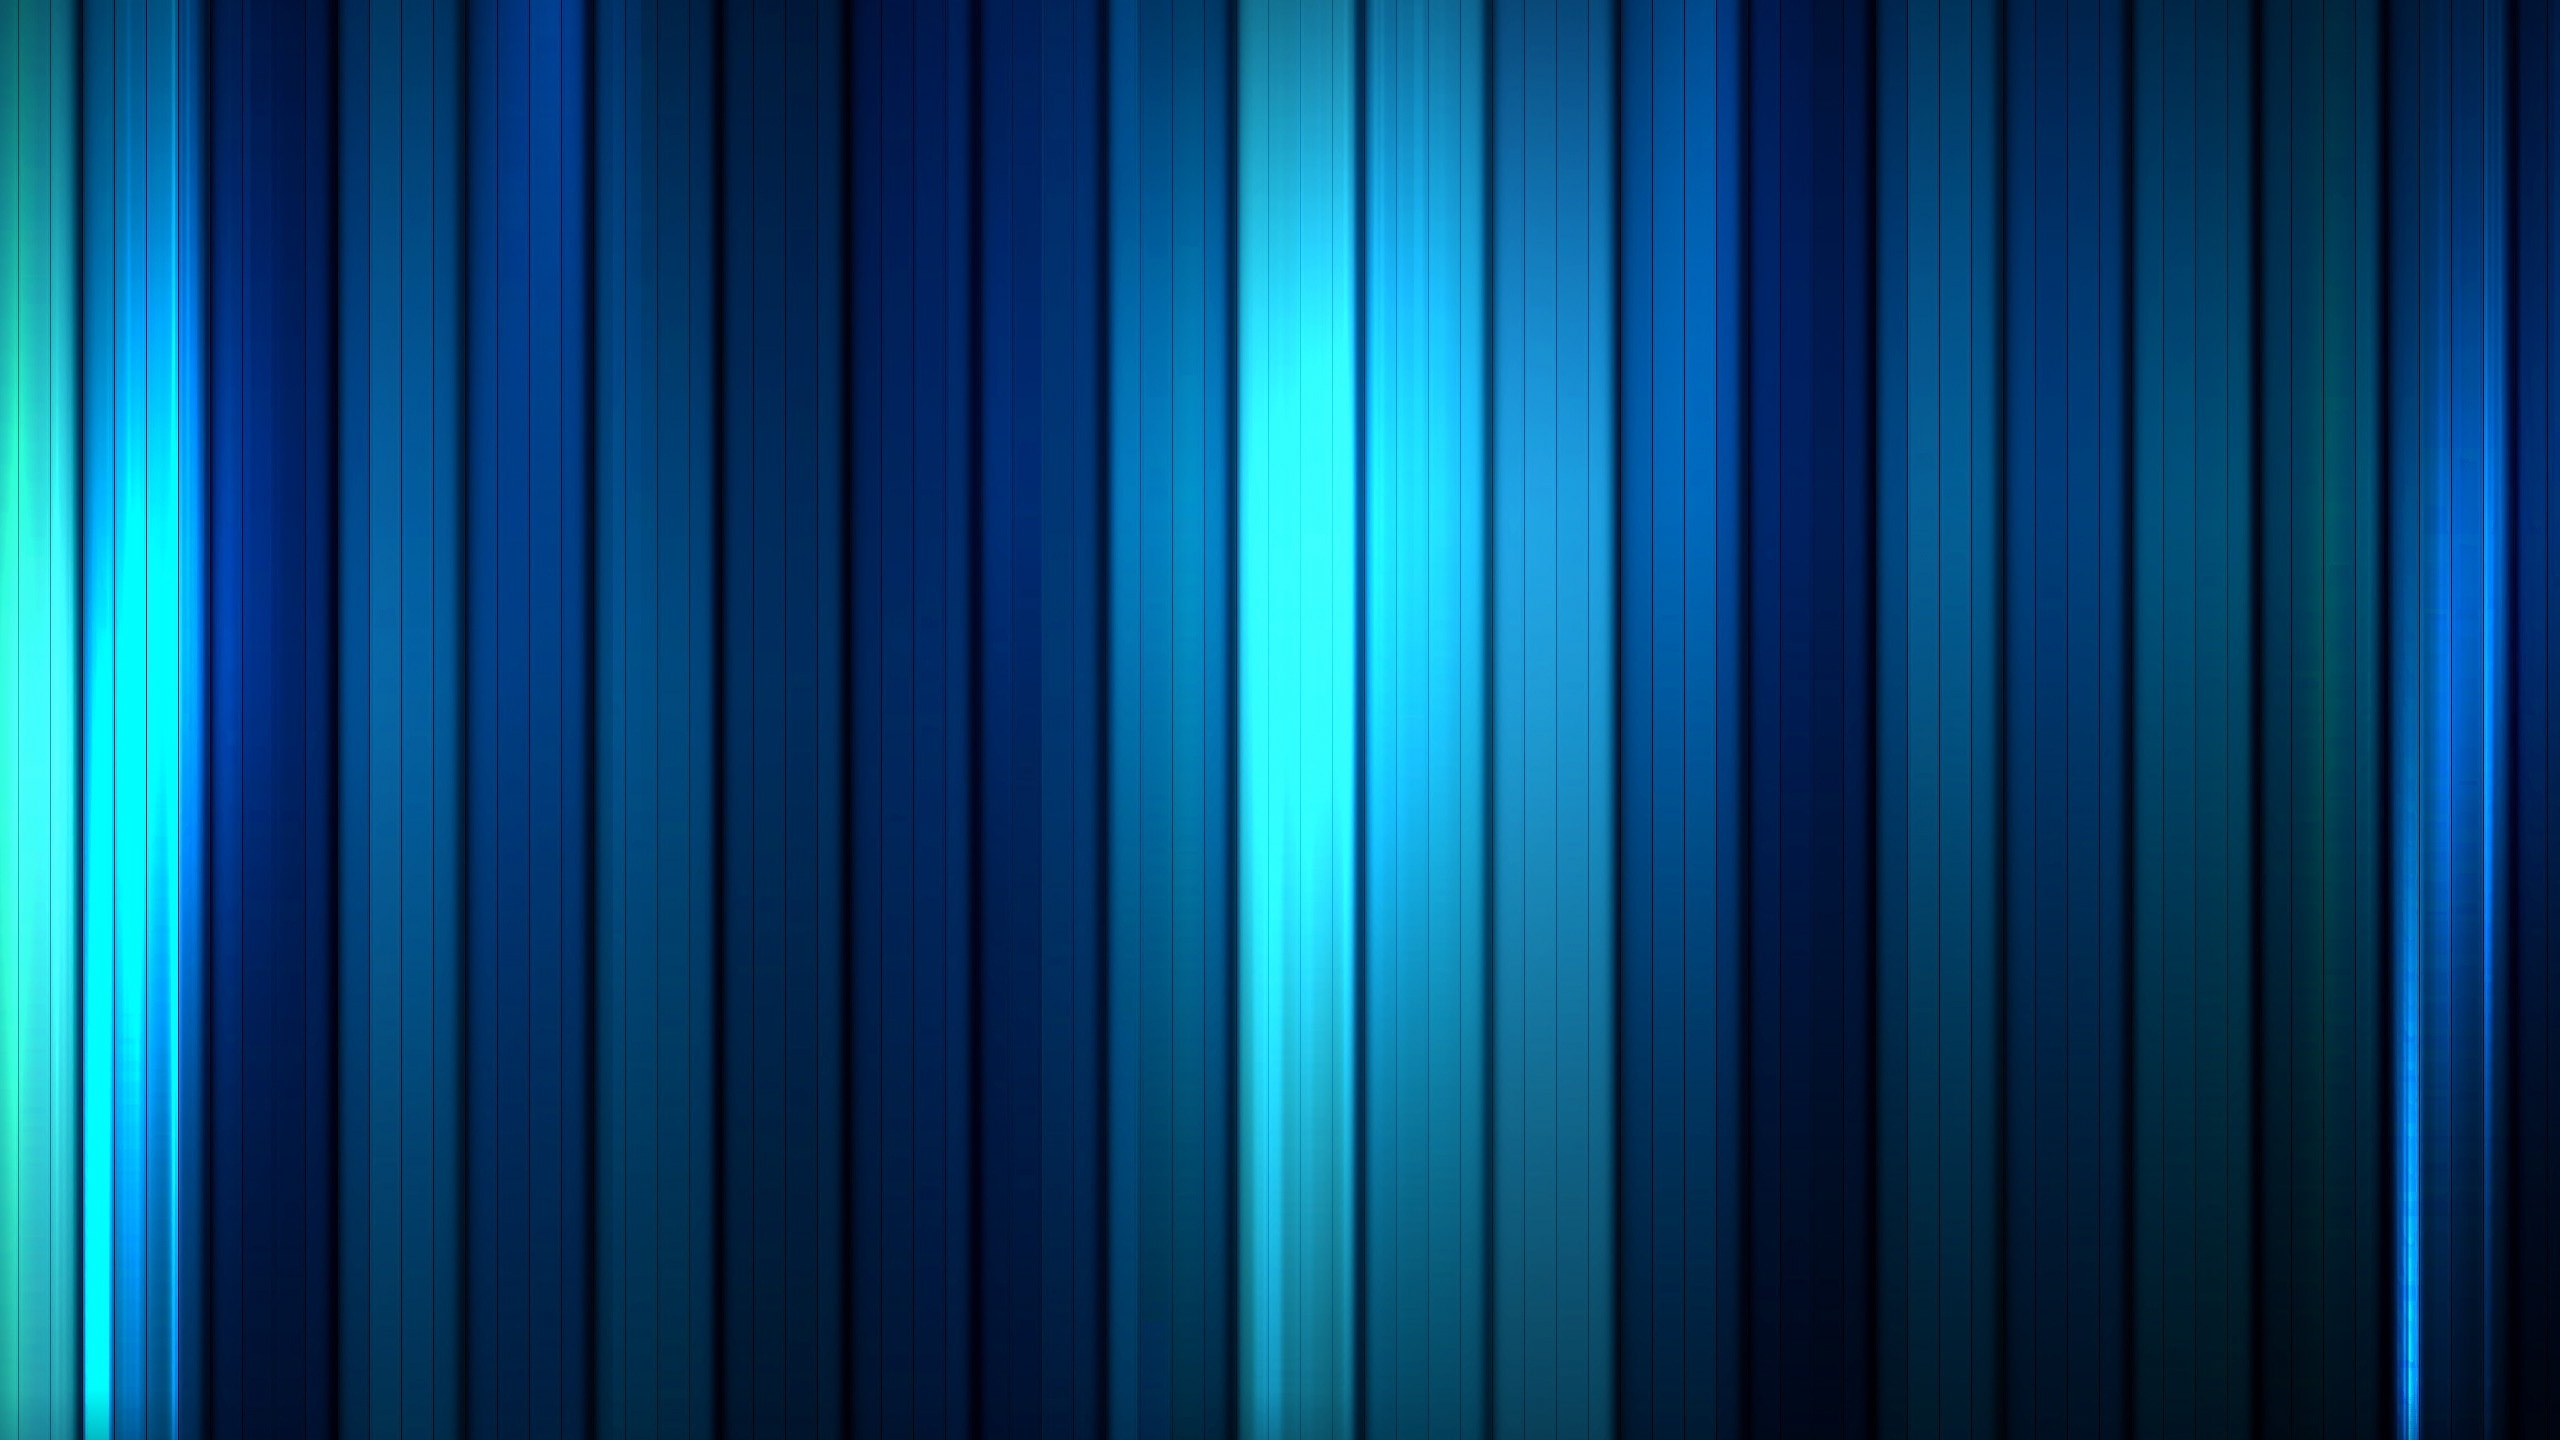 Vertical Blue Stripes Desktop Pc And Mac Wallpaper